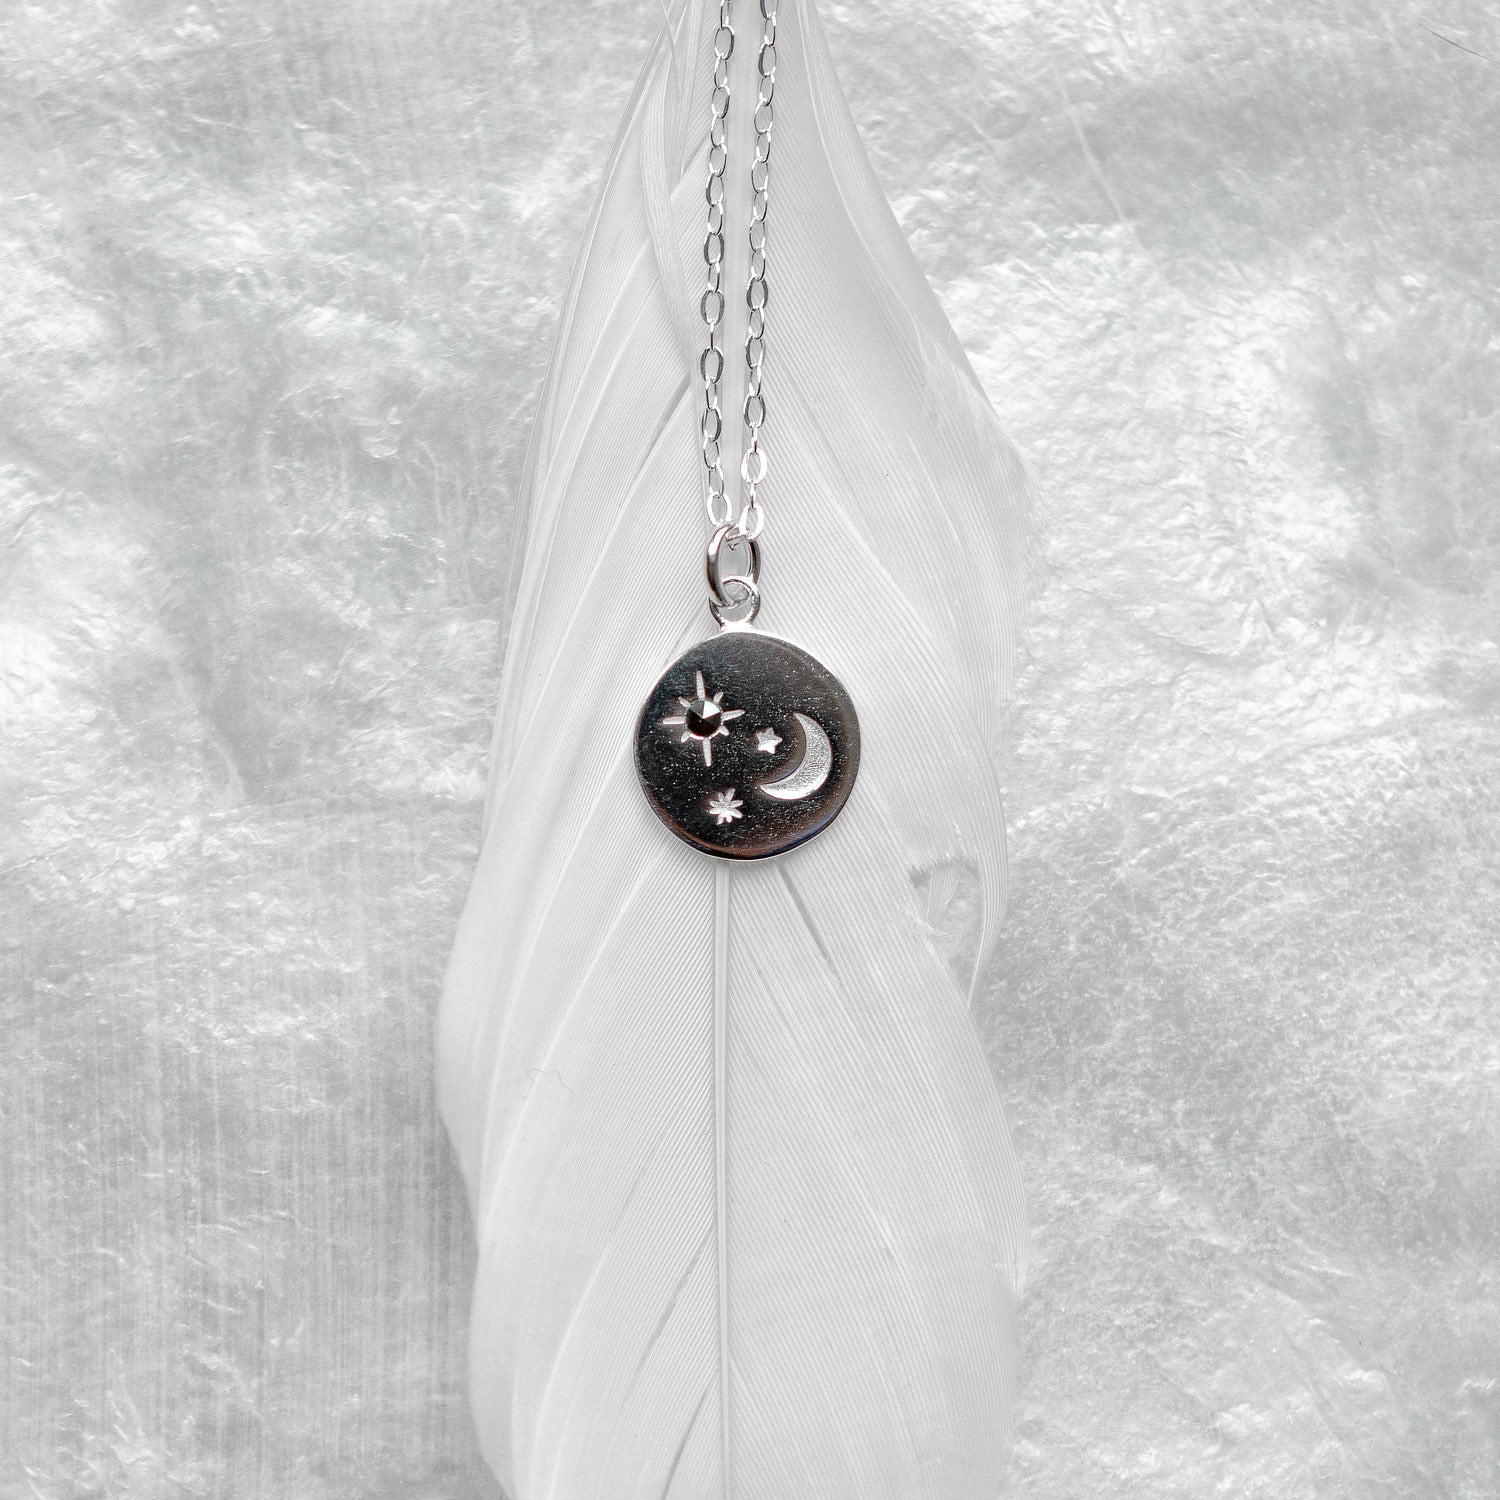 Moon & stars amulet silver pendant necklace - Simone Walsh Jewellery Australia